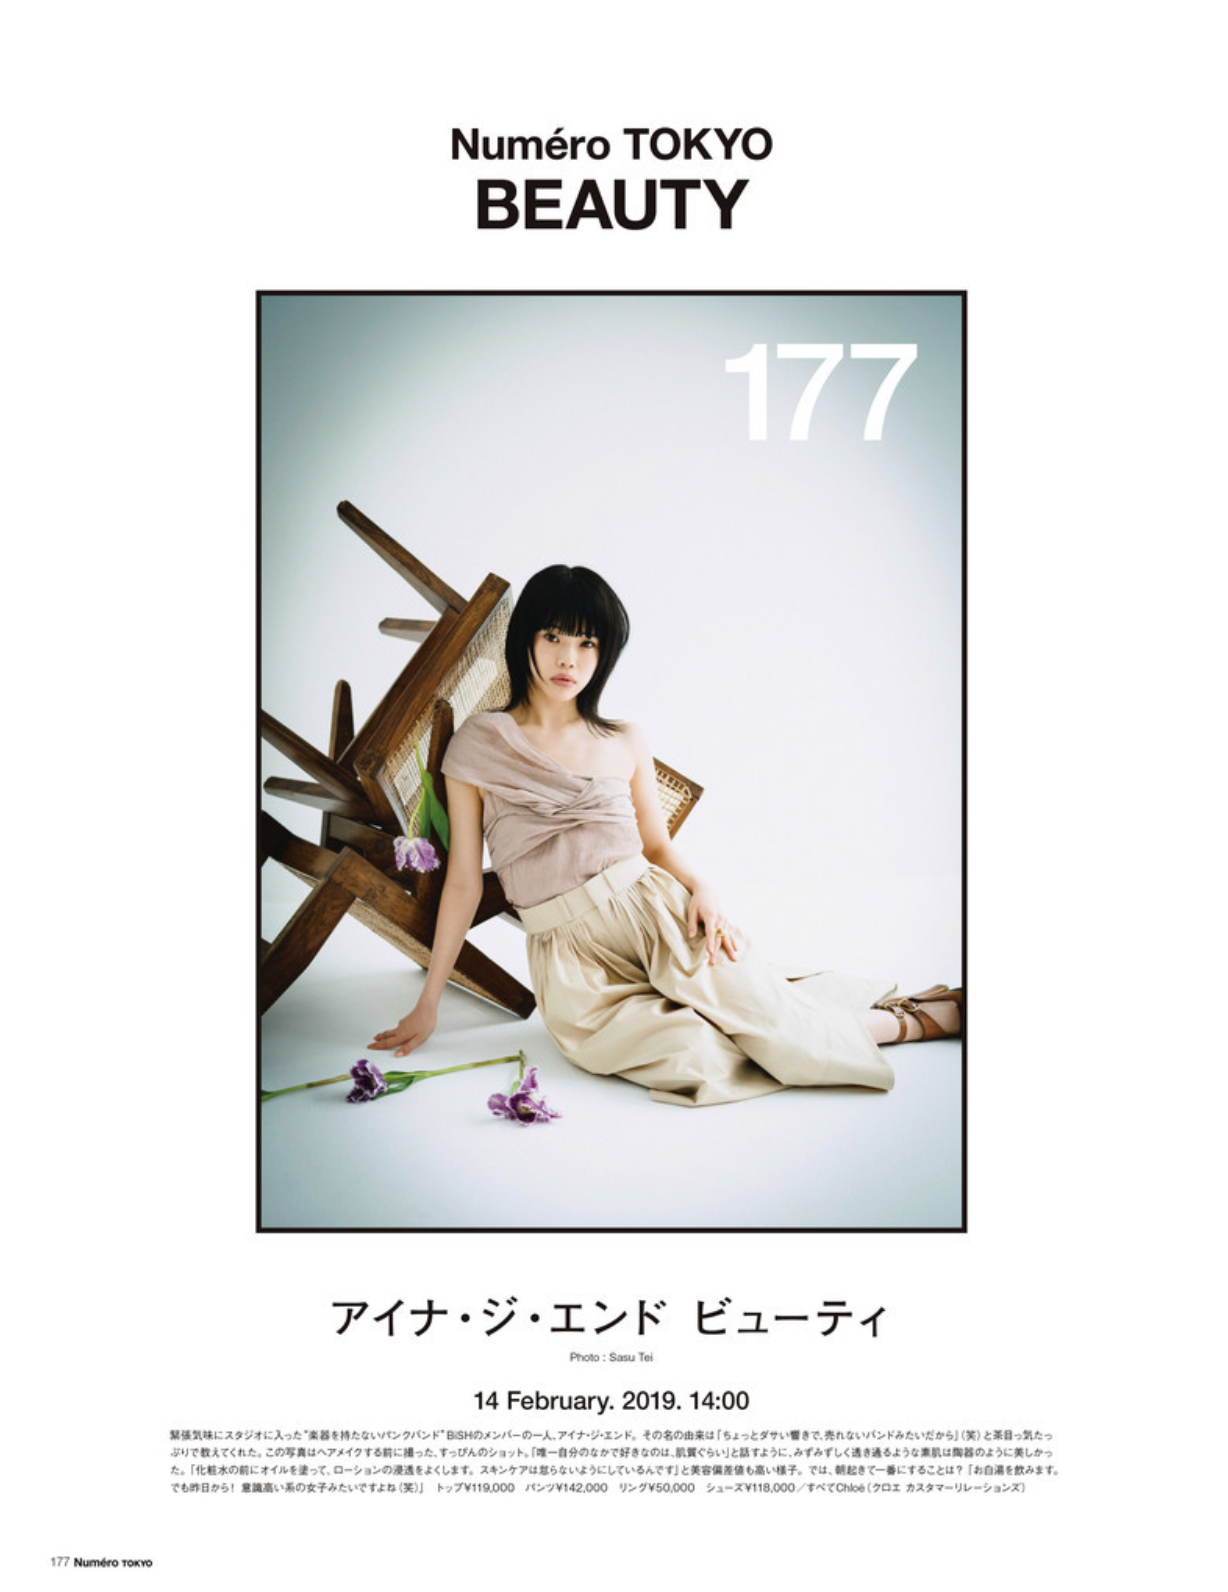 Numero TOKYO Beauty / Aina The End